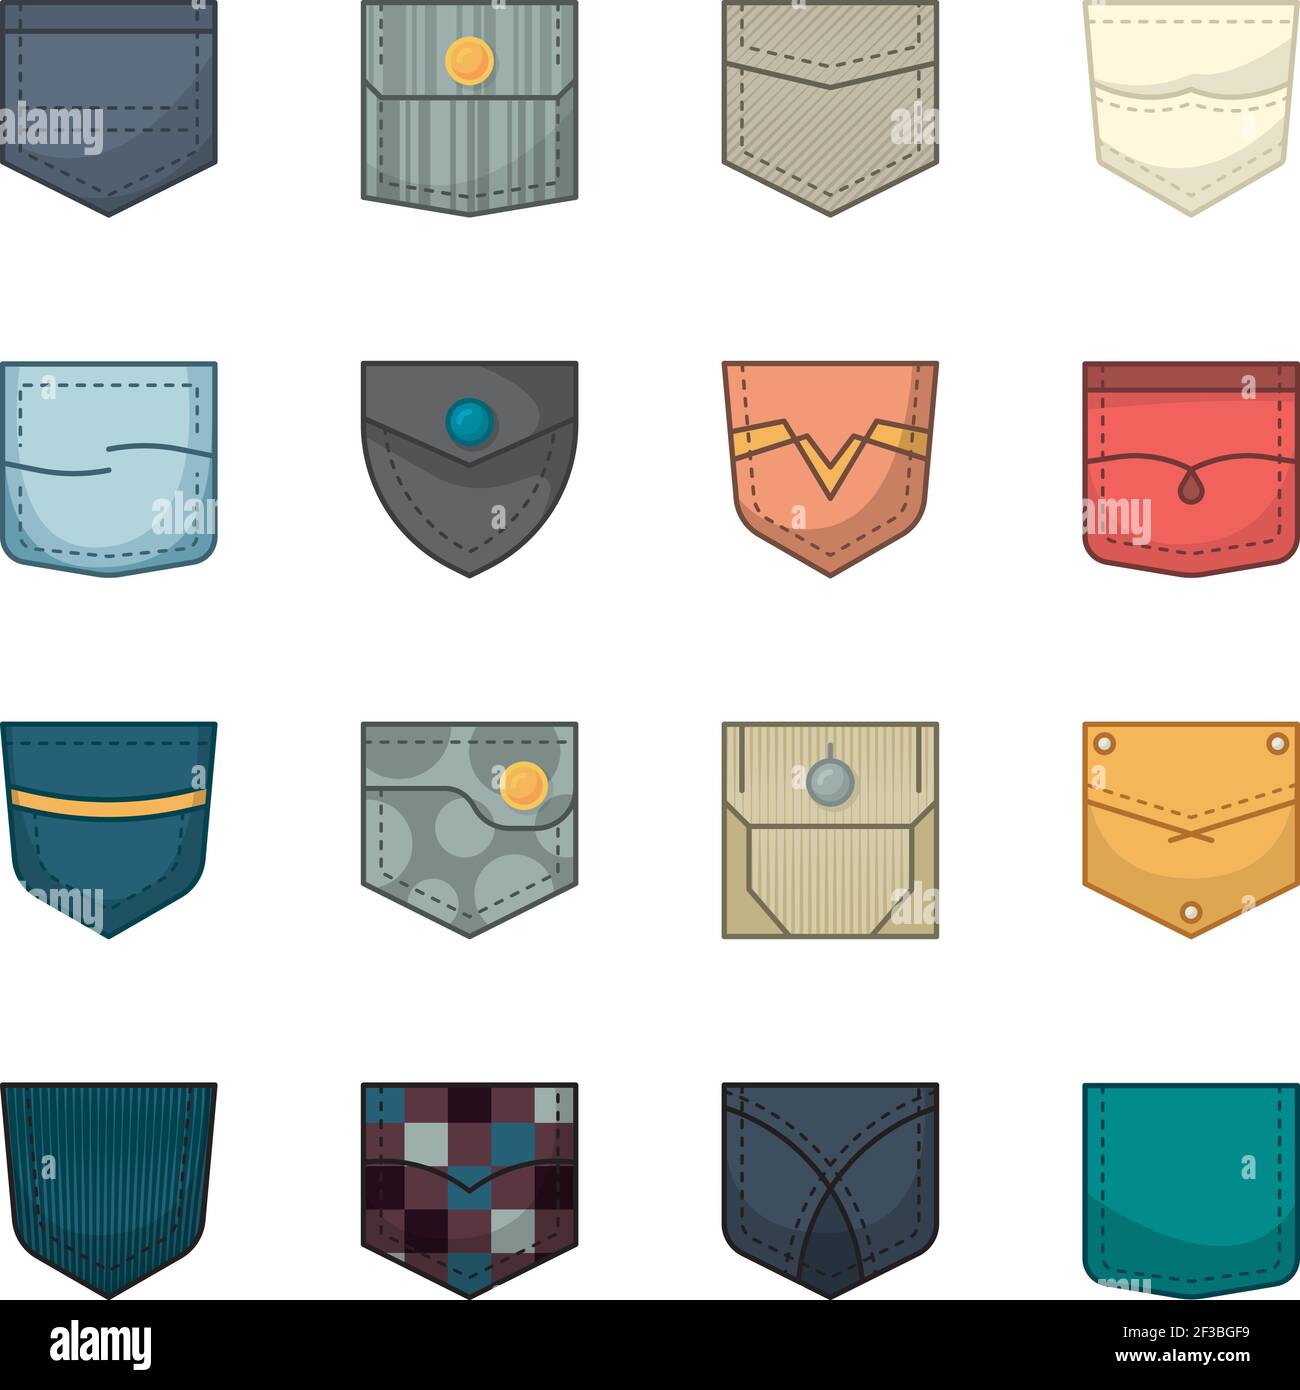 Plenty of fabric patches stock photo. Image of customization - 143367370